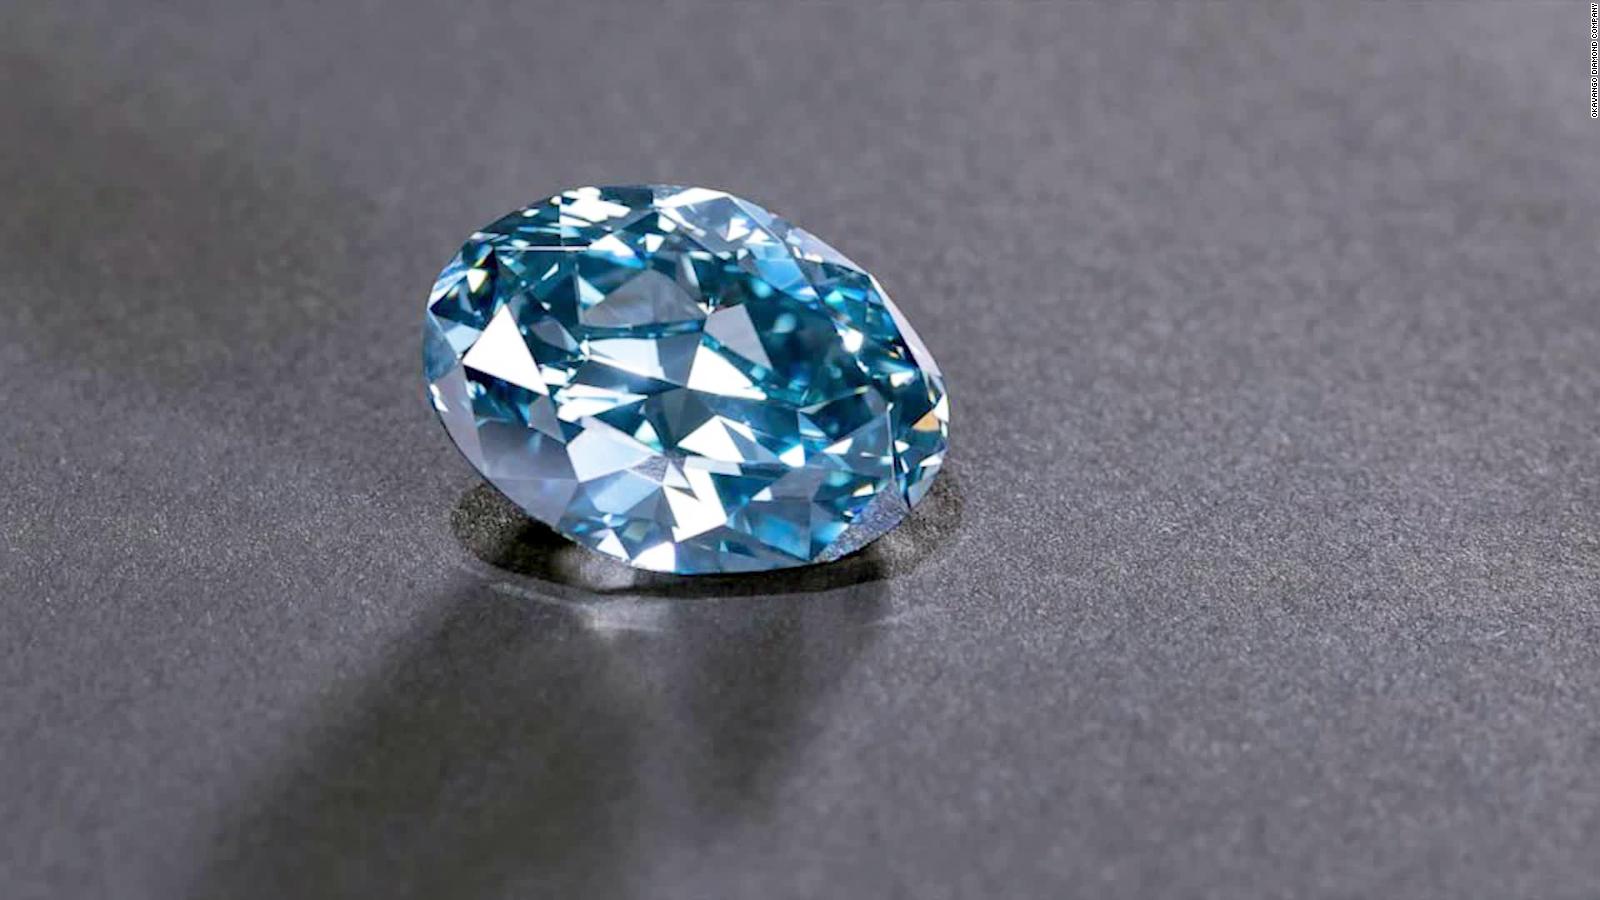 Disponible Descubrir Esta llorando Descubren un diamante azul de 20,46 quilates en Botswana | Video | CNN